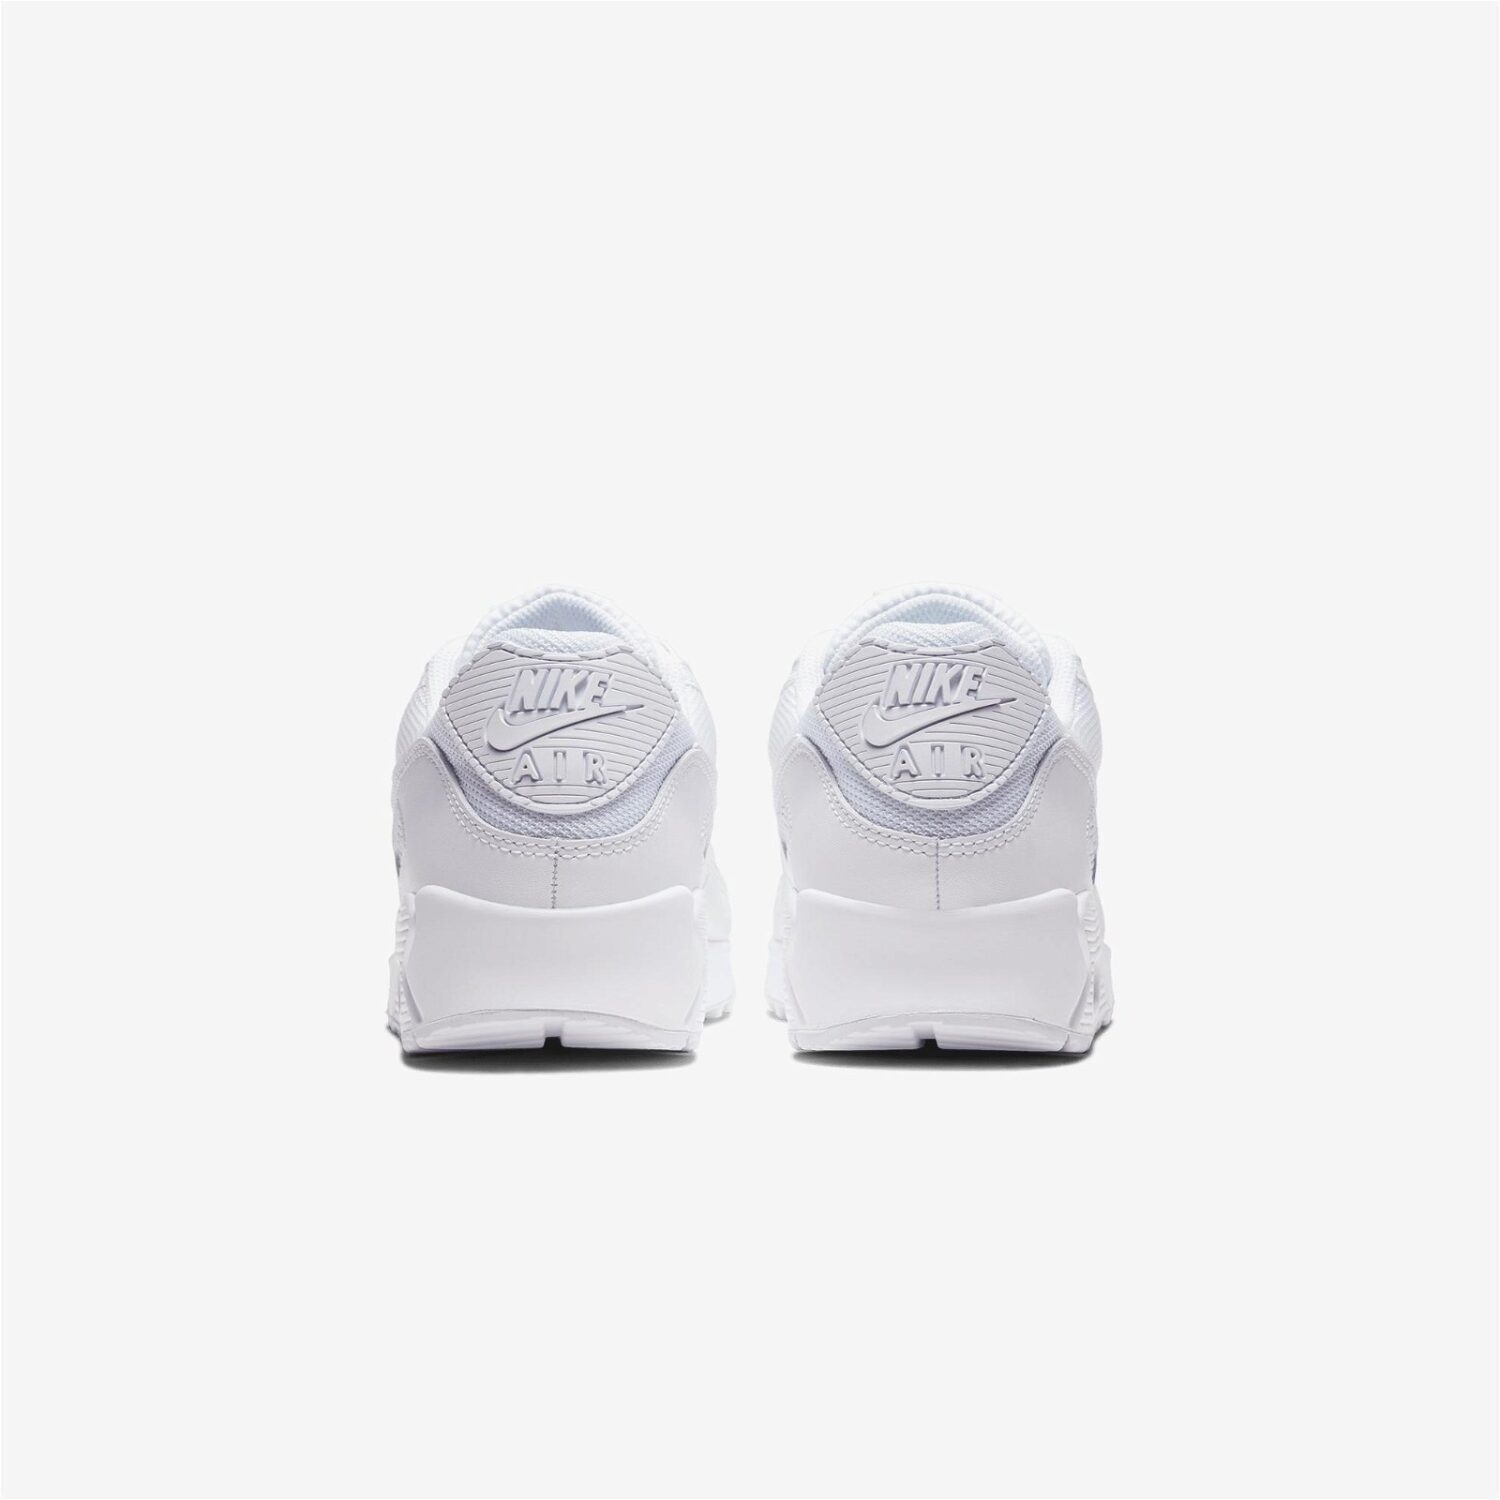 کفش مردانه نایکی Air Max 90 Beyaz Spor Ayakkabi- سفید